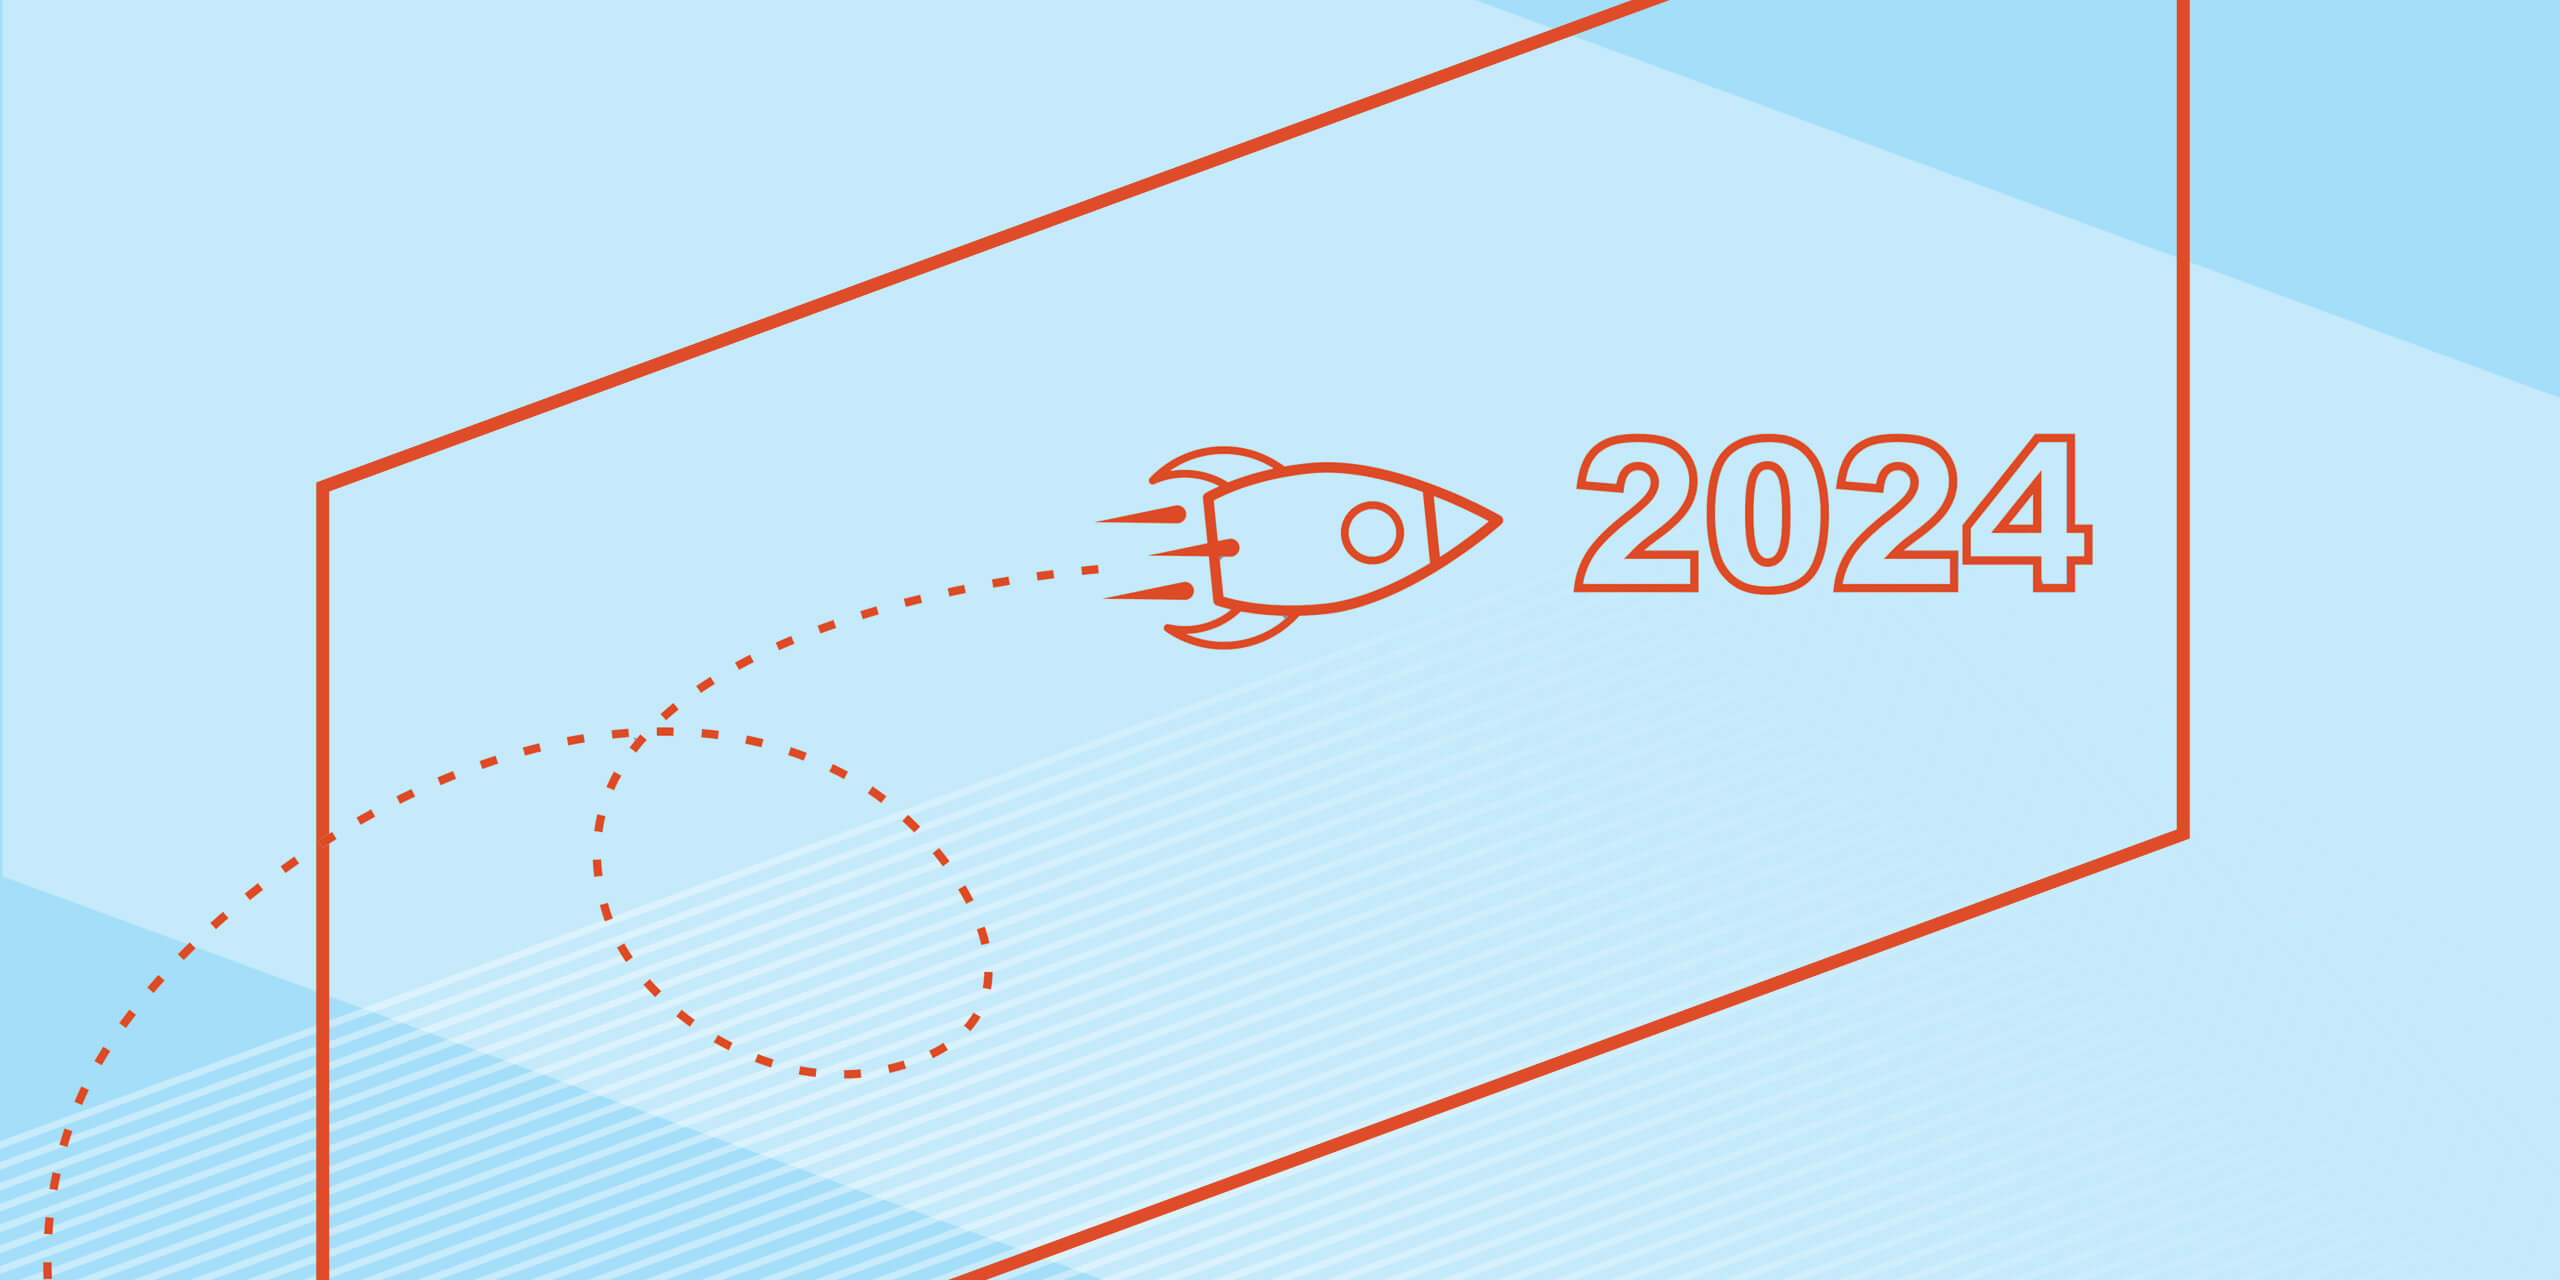 Rocket ship flying towards 2024